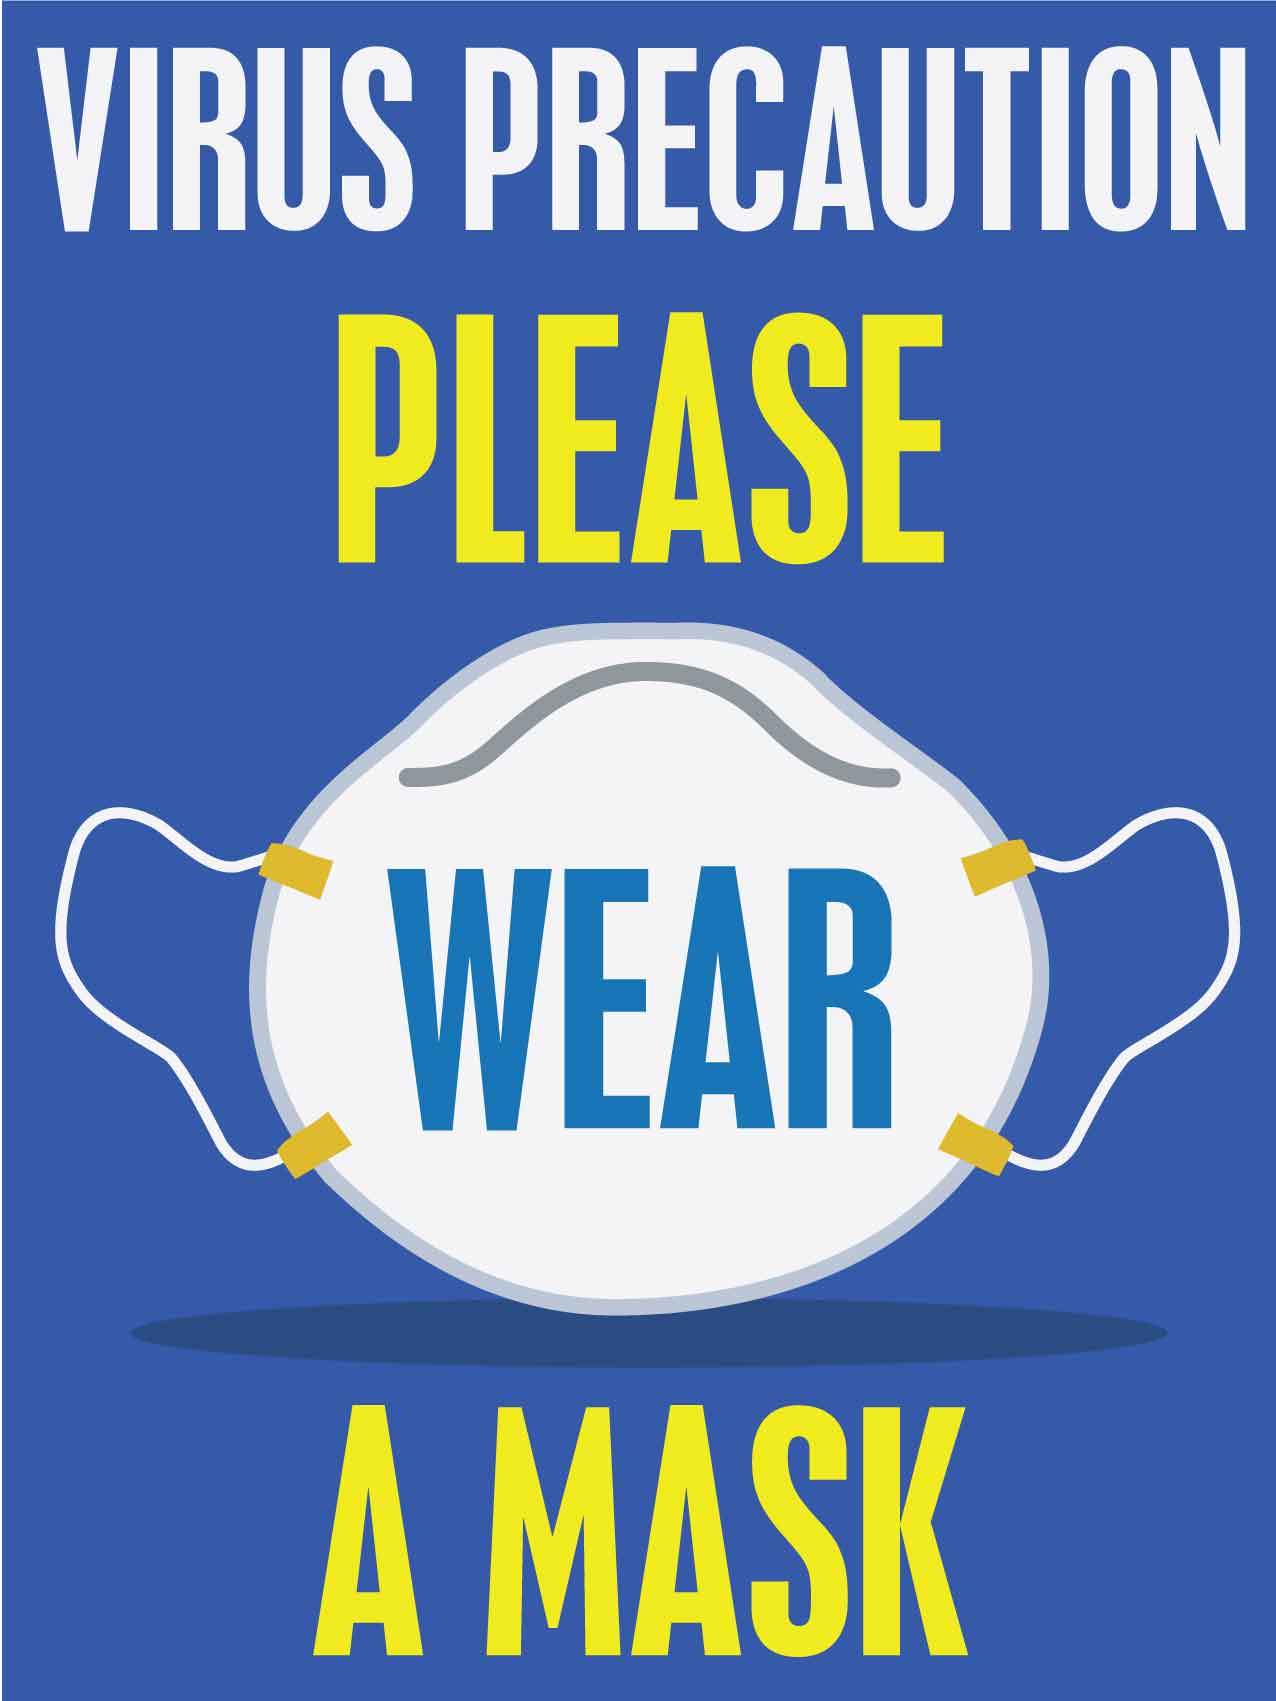 Virus Precaution Please Wear A Mask Sign